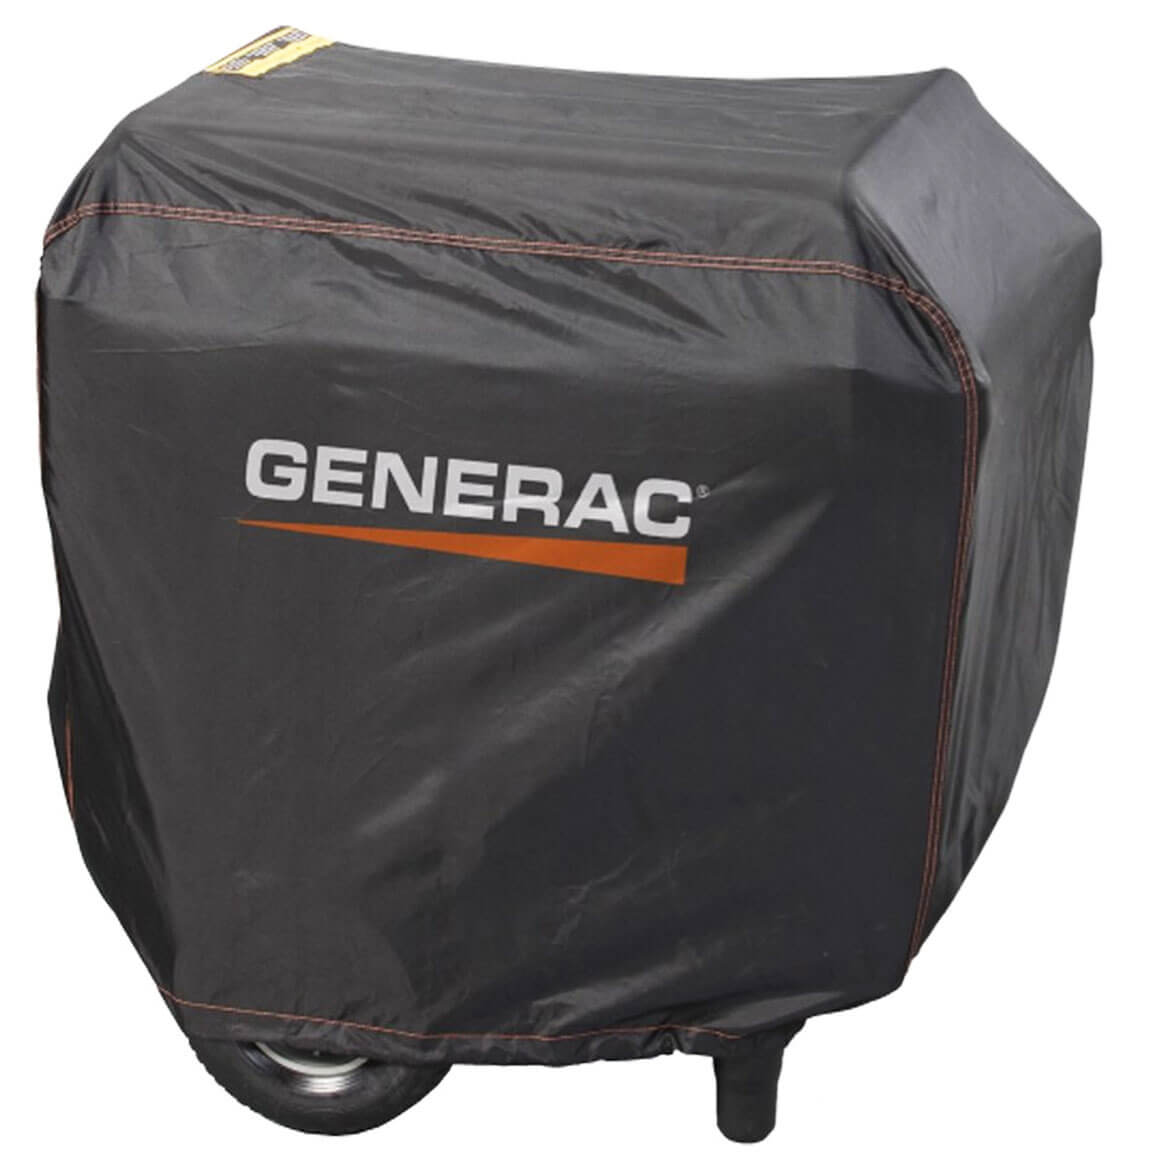 Generac, Generac 6811 5000 - 8,000-Watt Portable Generator Storage Generator Cover